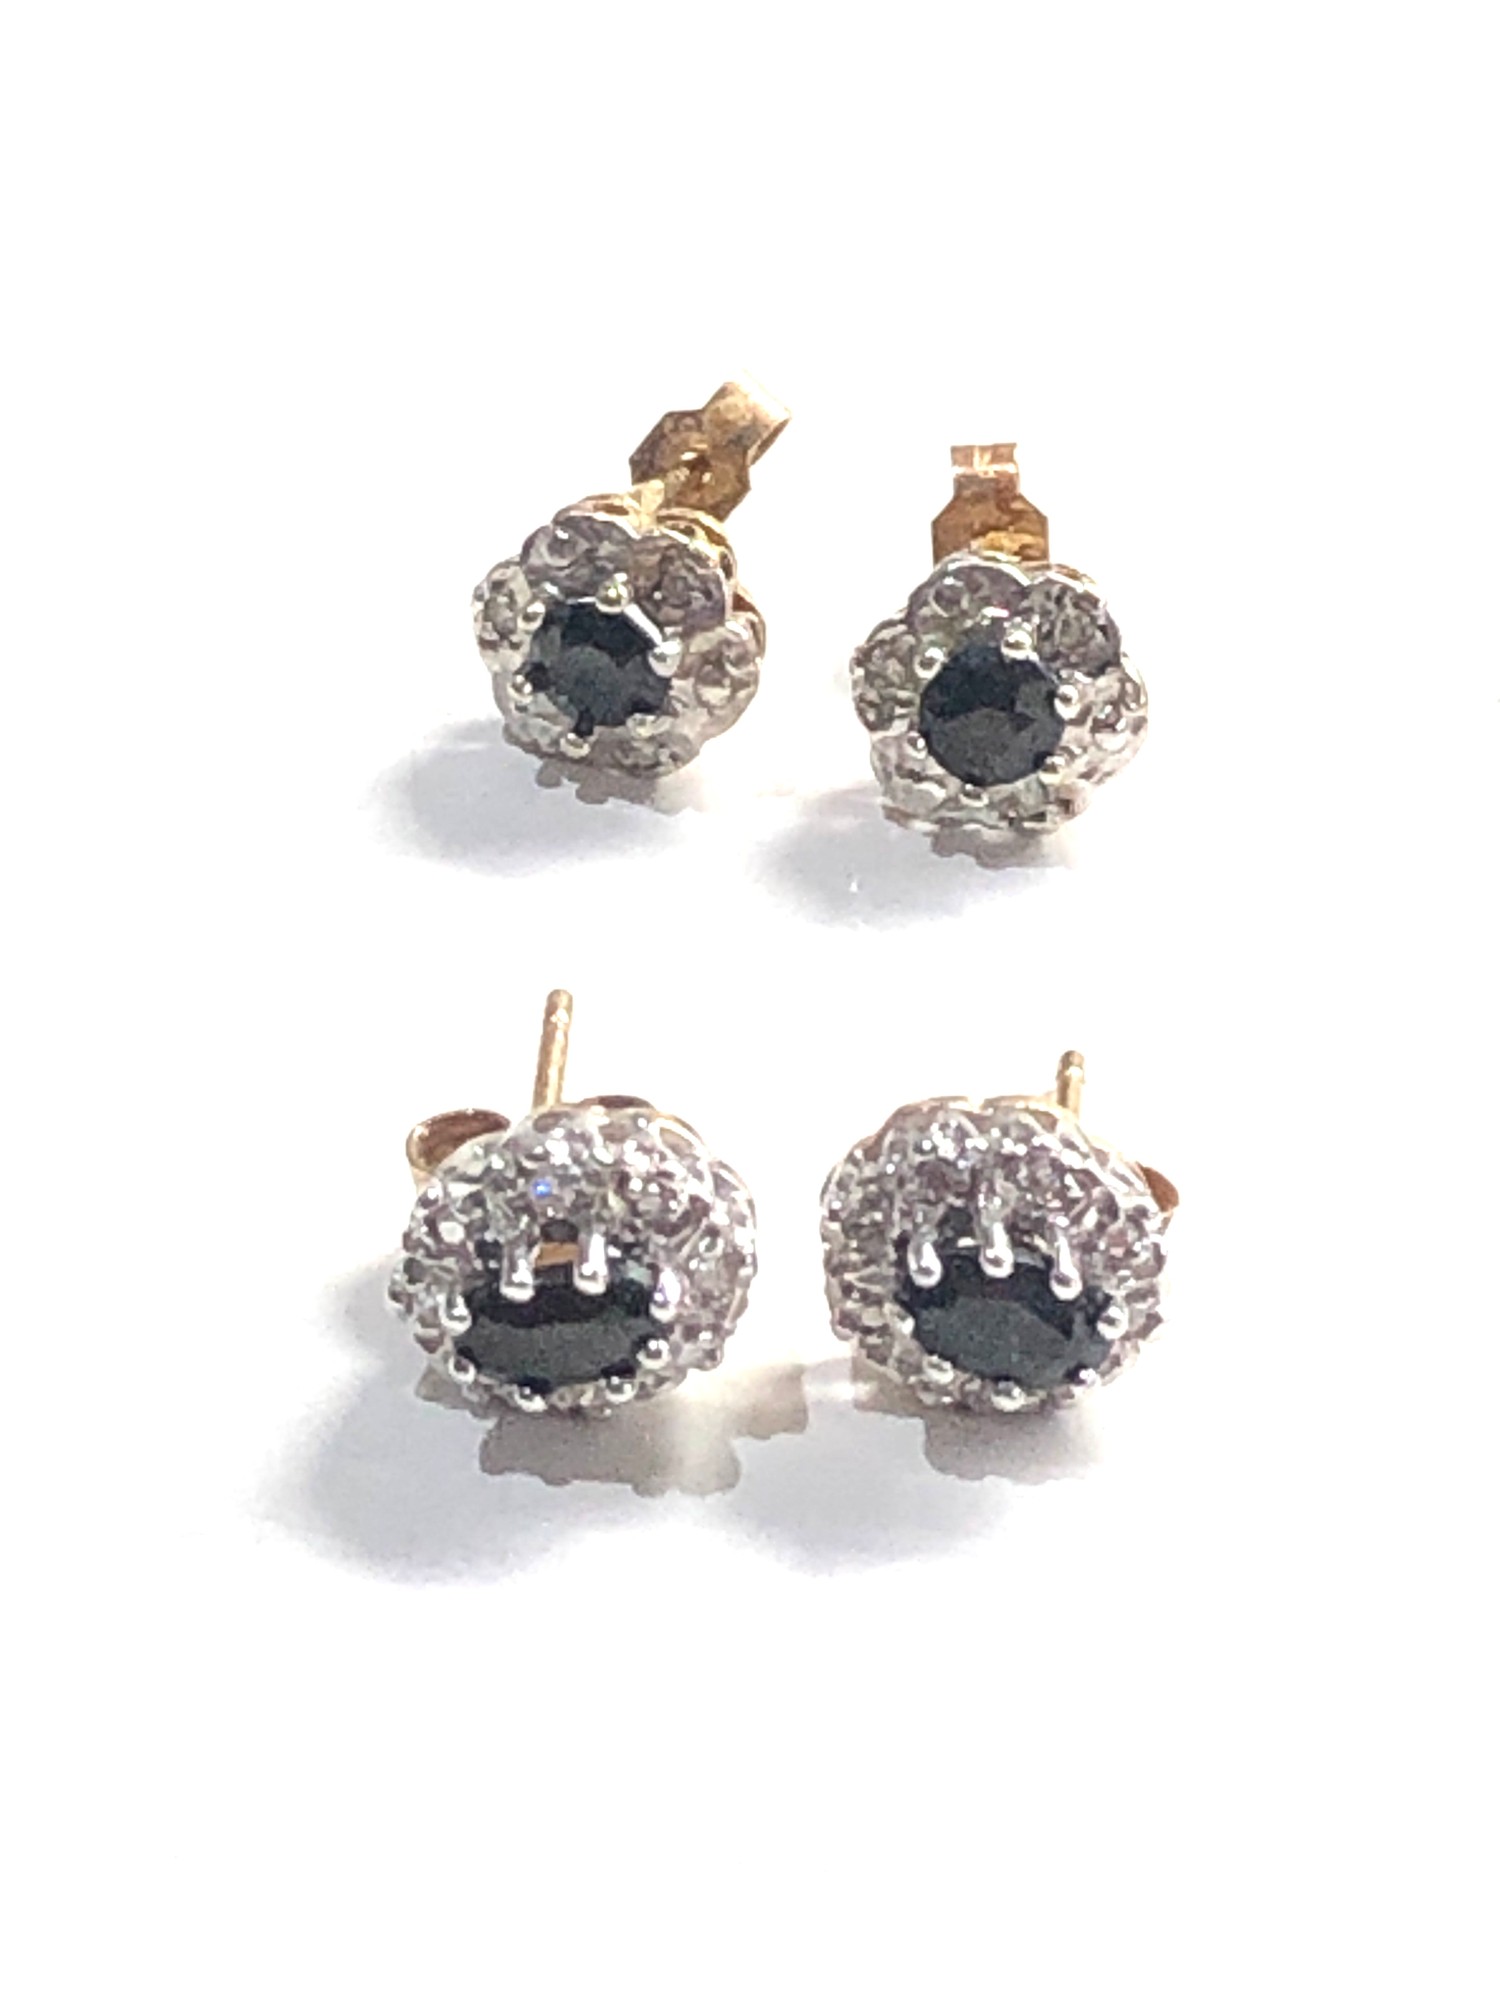 2 x 9ct diamond & sapphire stud earrings 2.7g